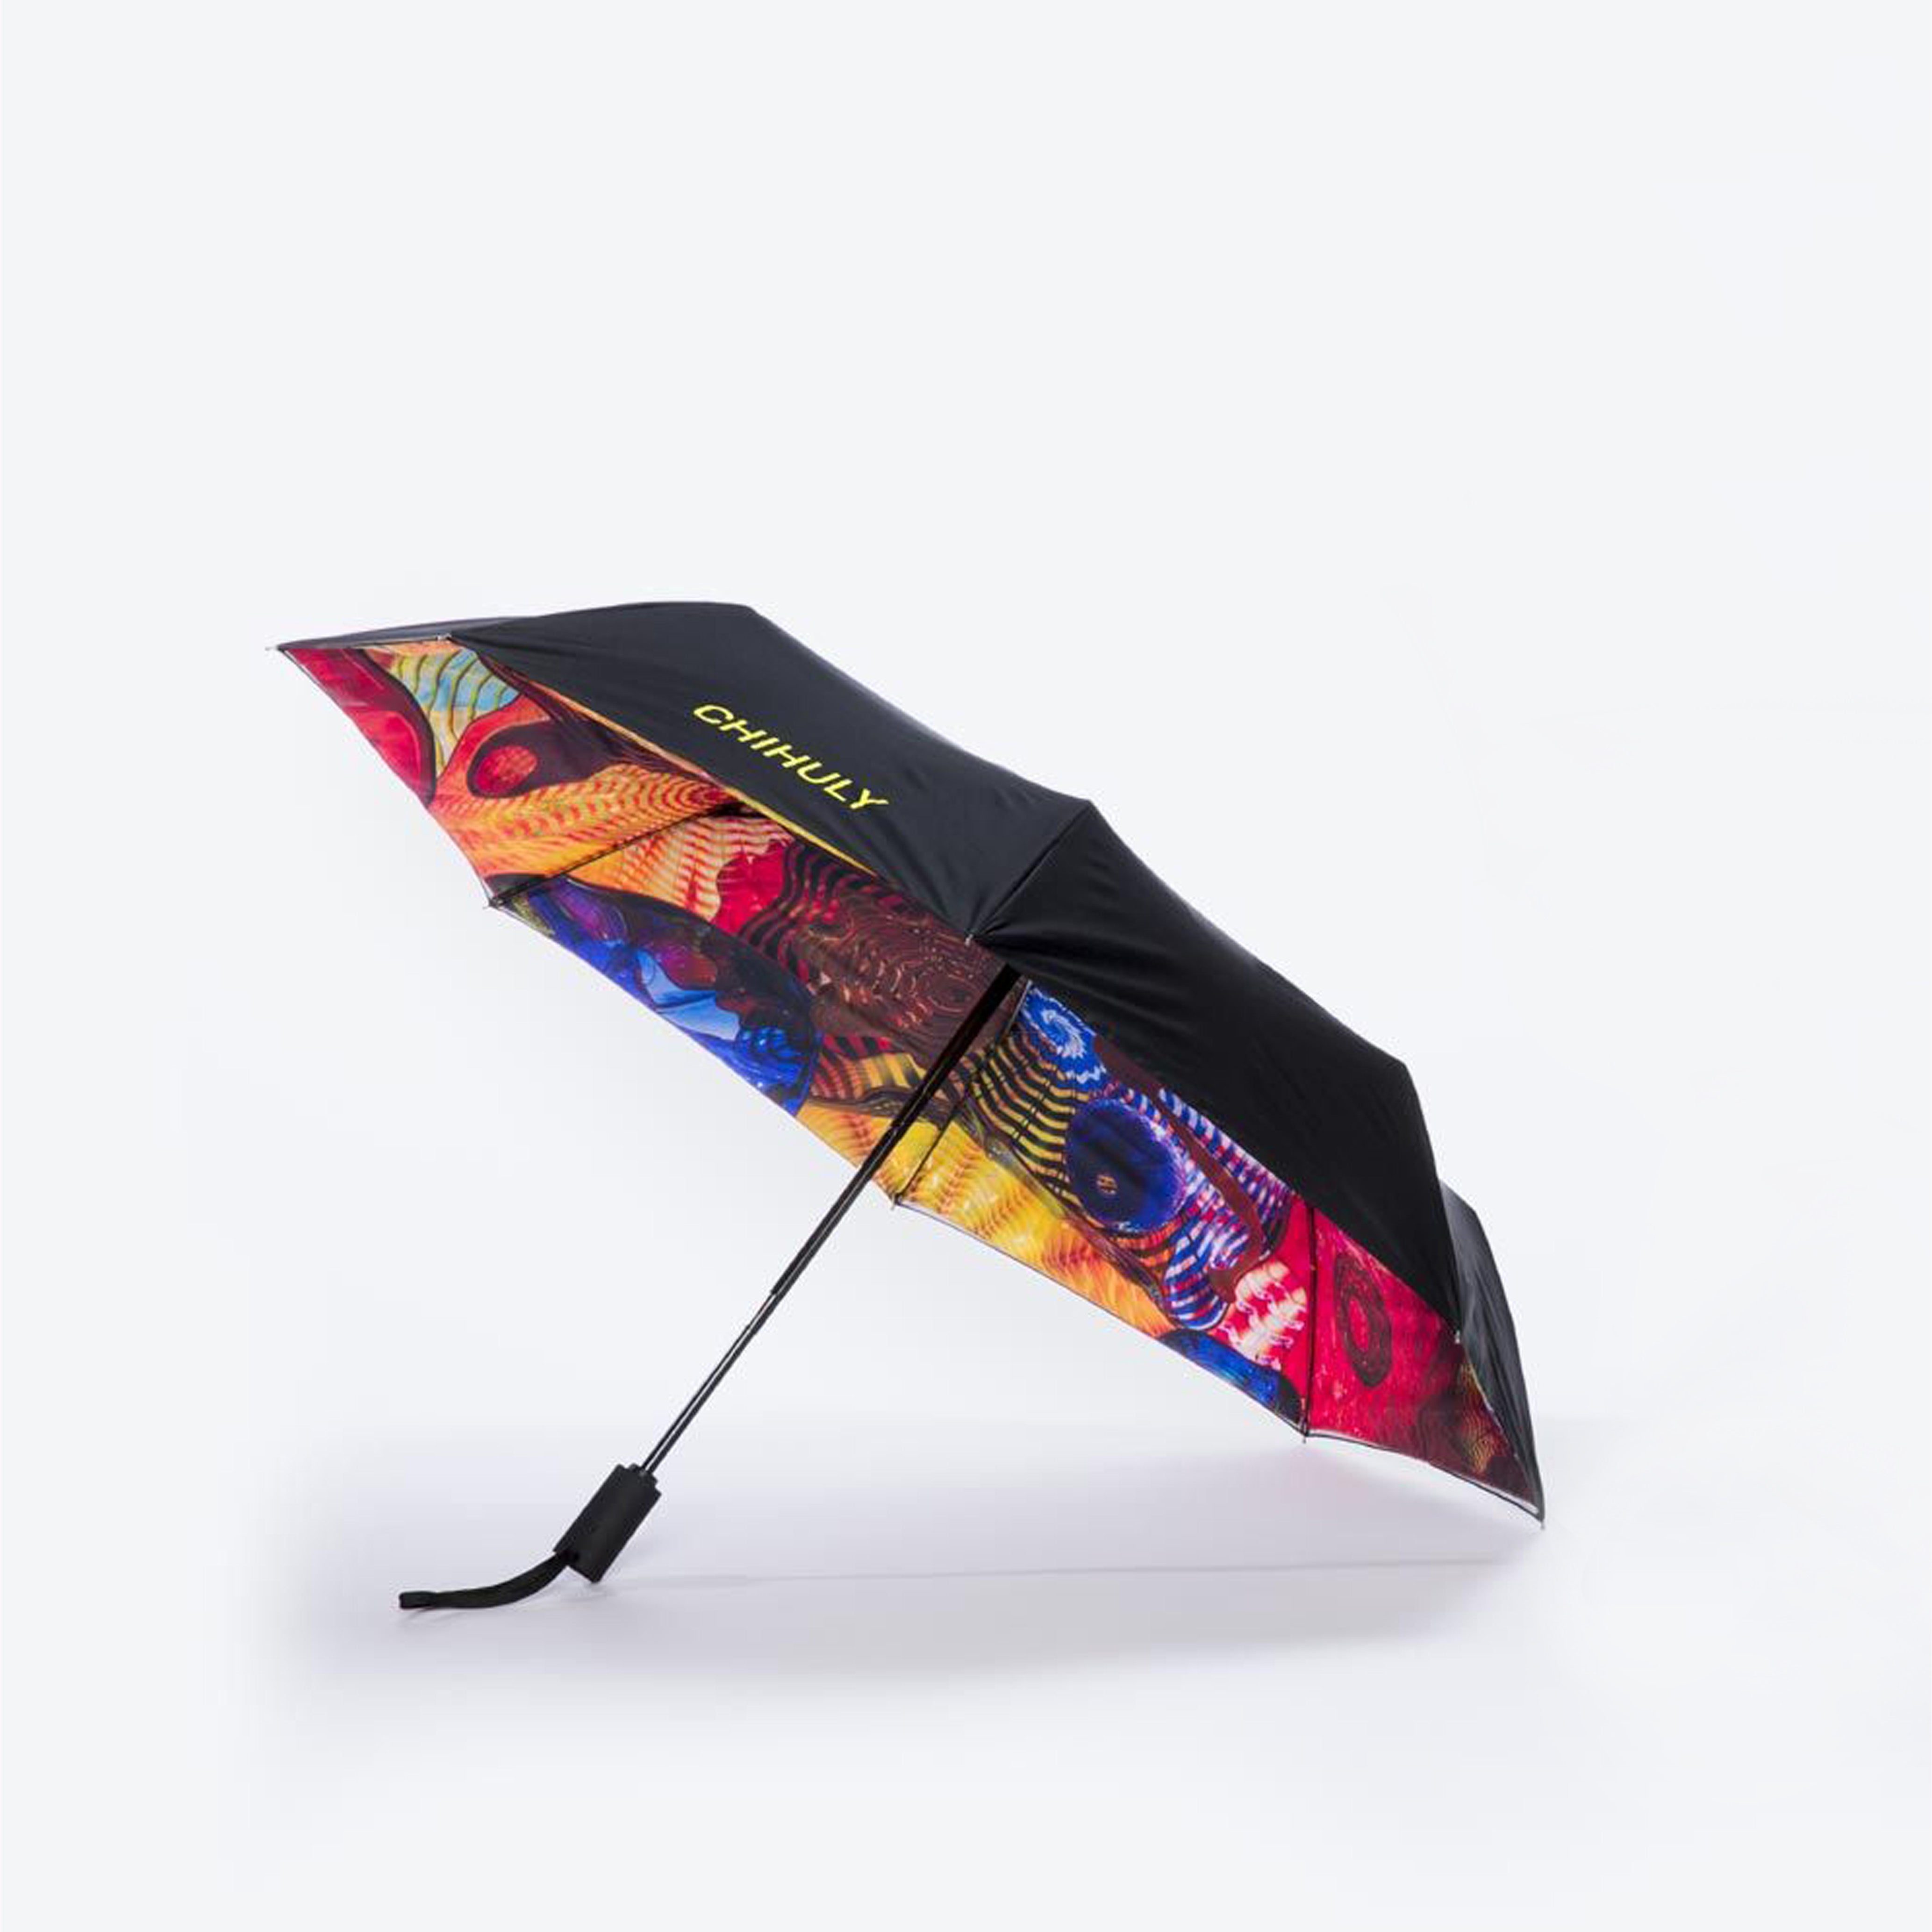 Chihuly Pergola Umbrella Travel size